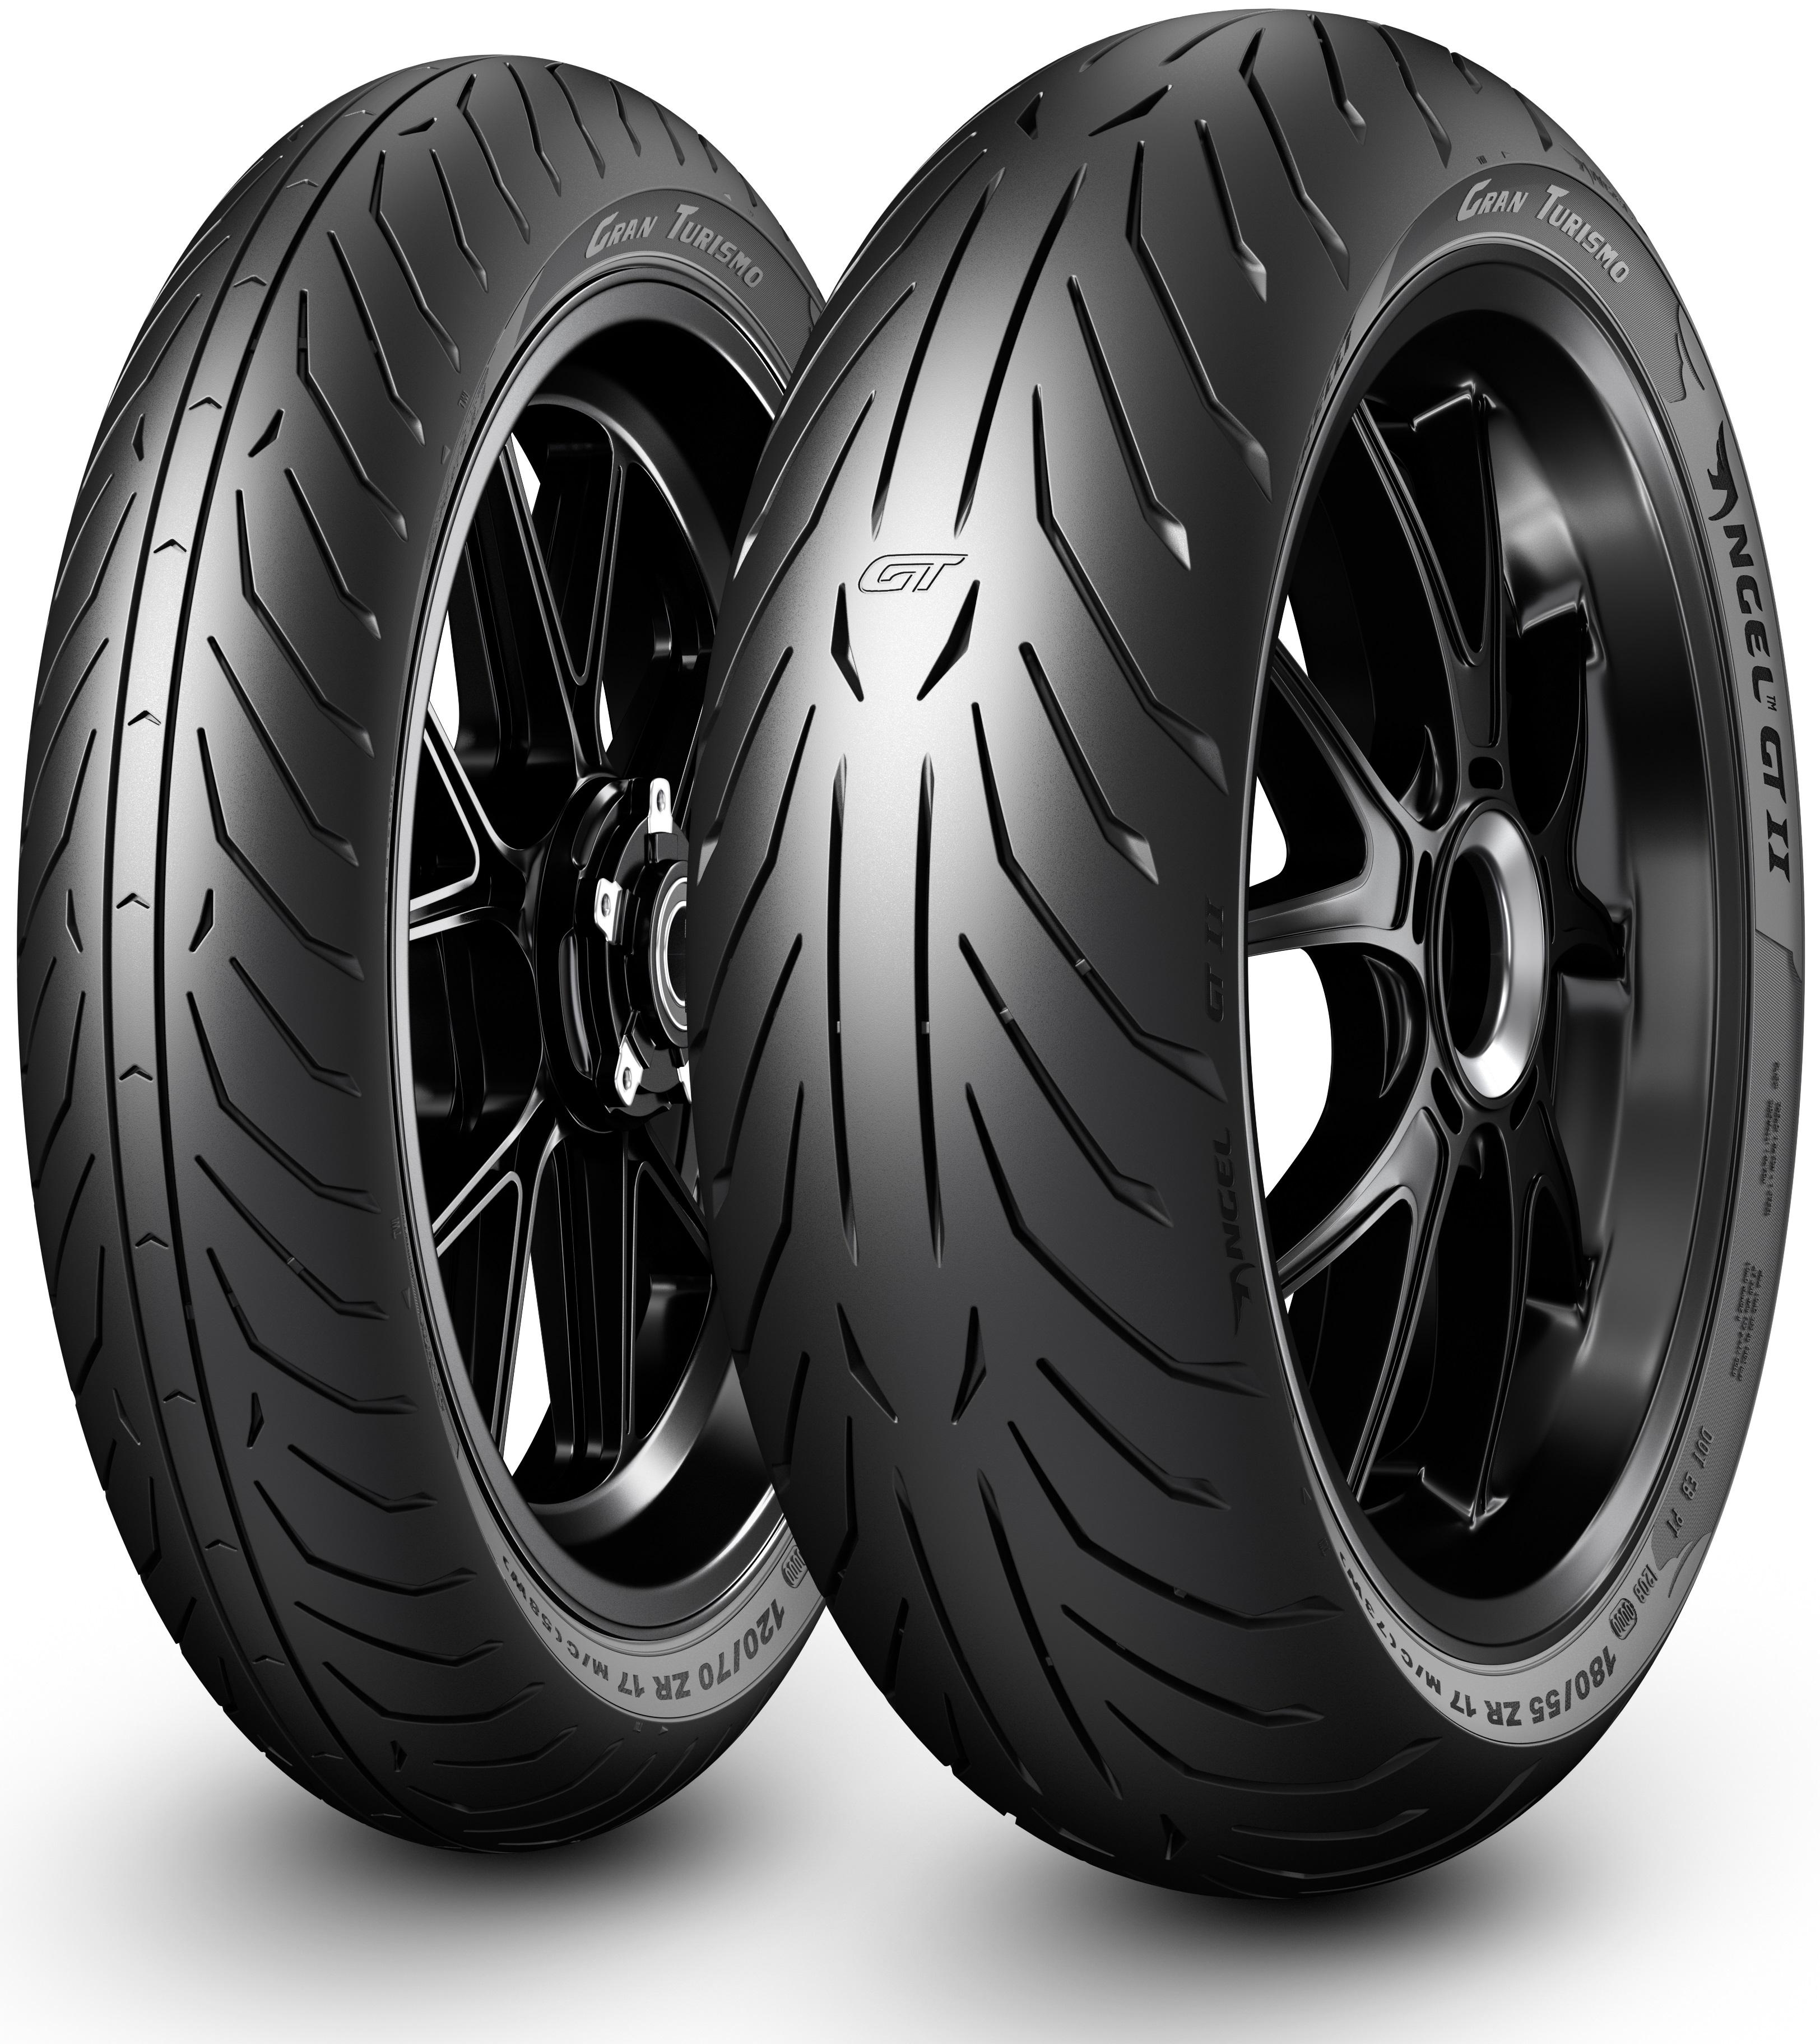 Pirelli Angel GT II Tyres